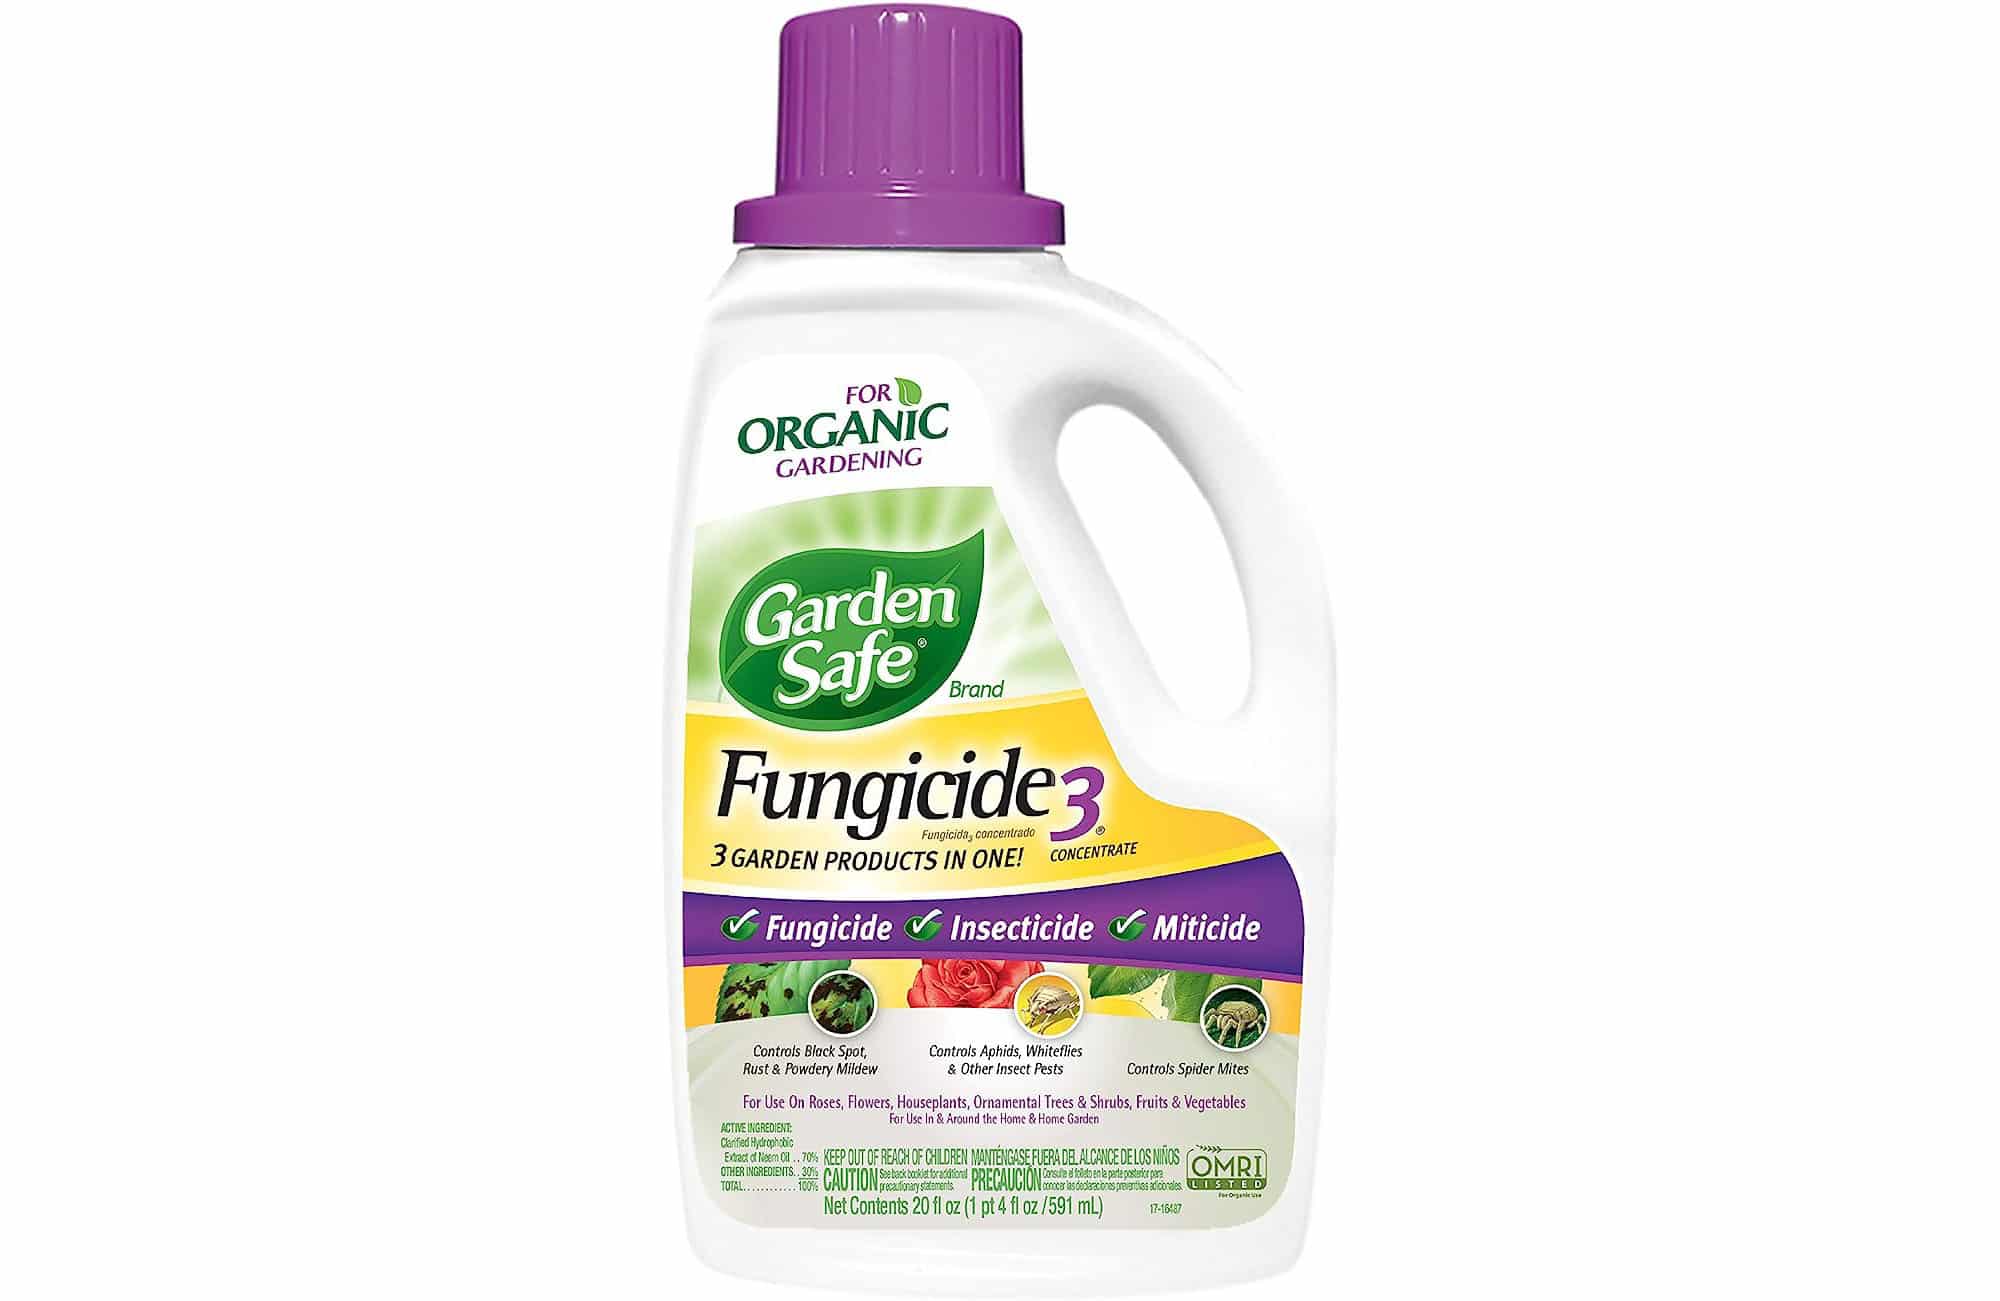 Fungicide 3 Garden Safe